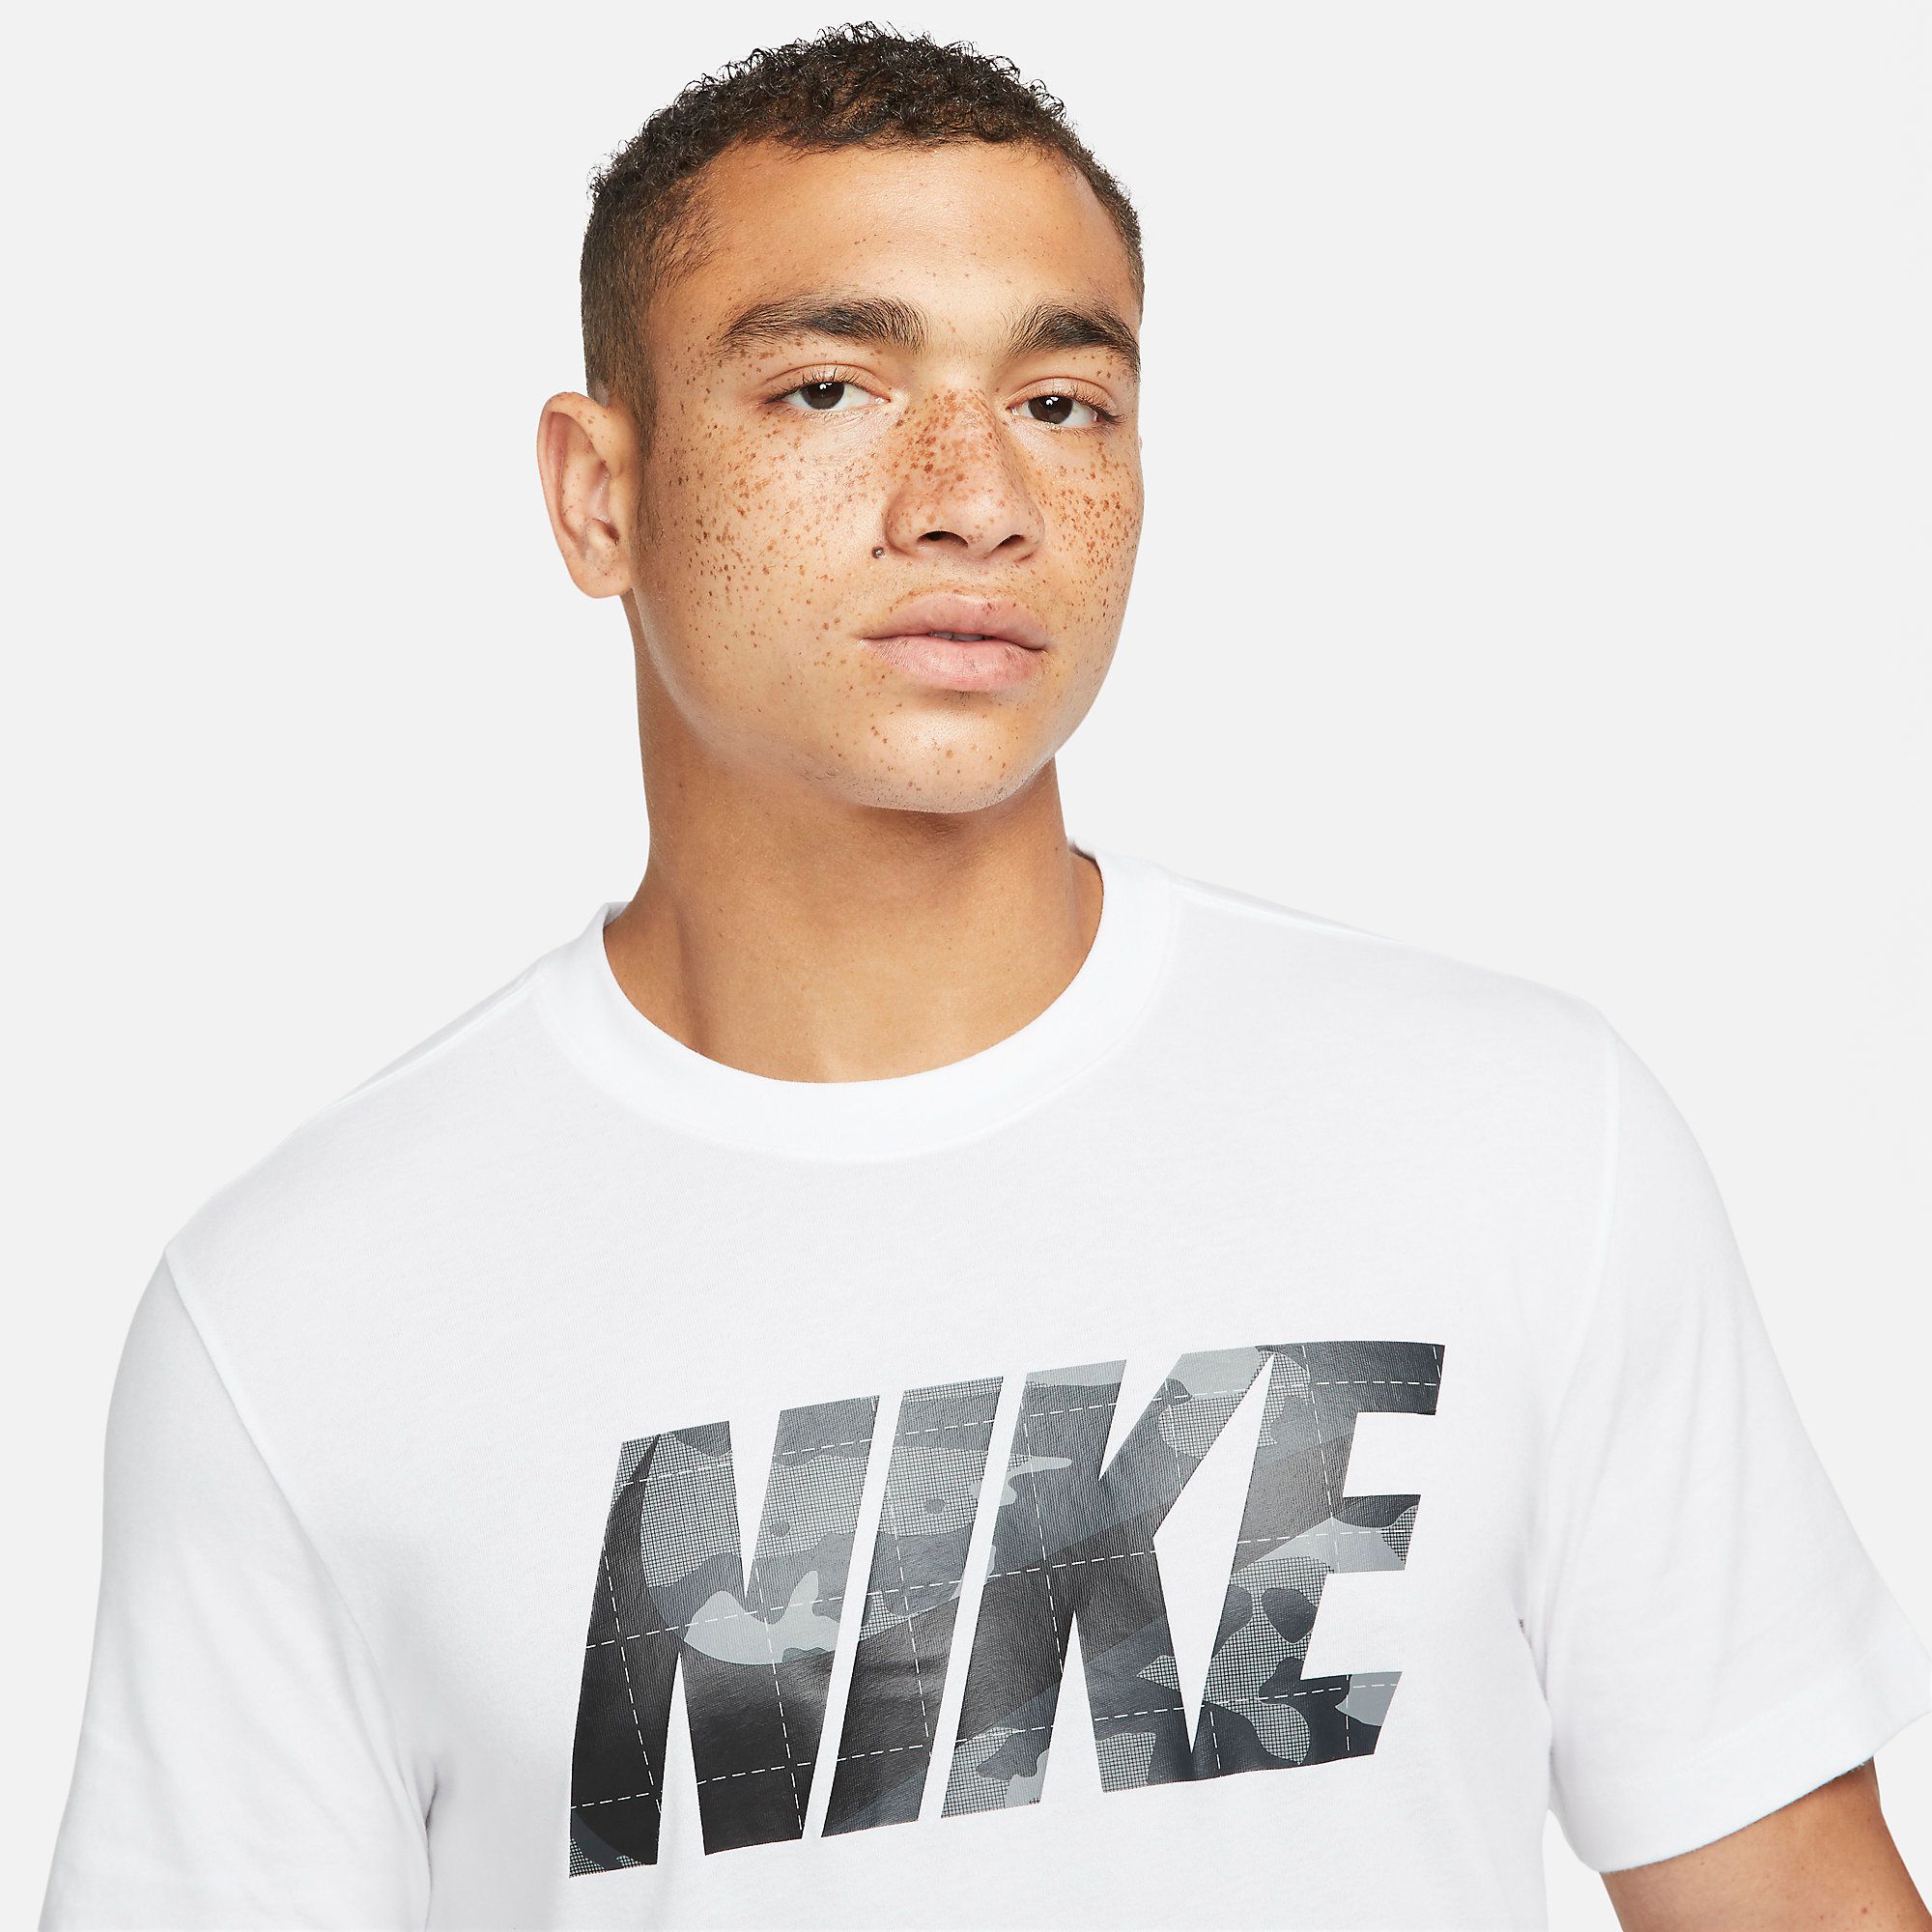  Nike Dri-FIT Training T-Shirt - White 